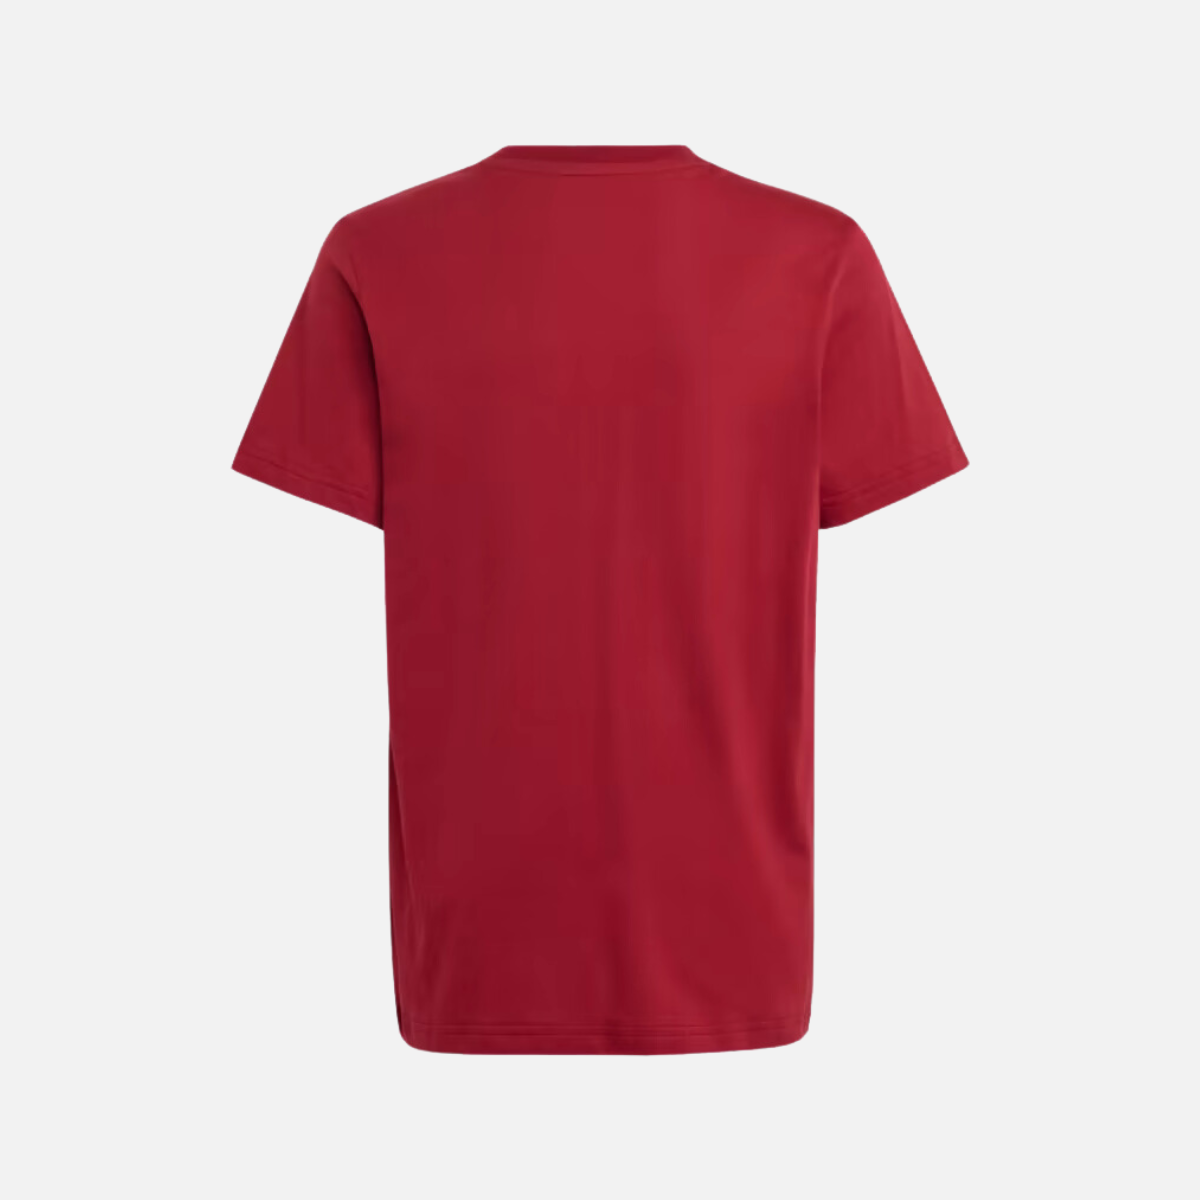 Adidas Collegiate Graphic Kid Unisex T-shirt (7-16 Years) -Collegiate Burgundy